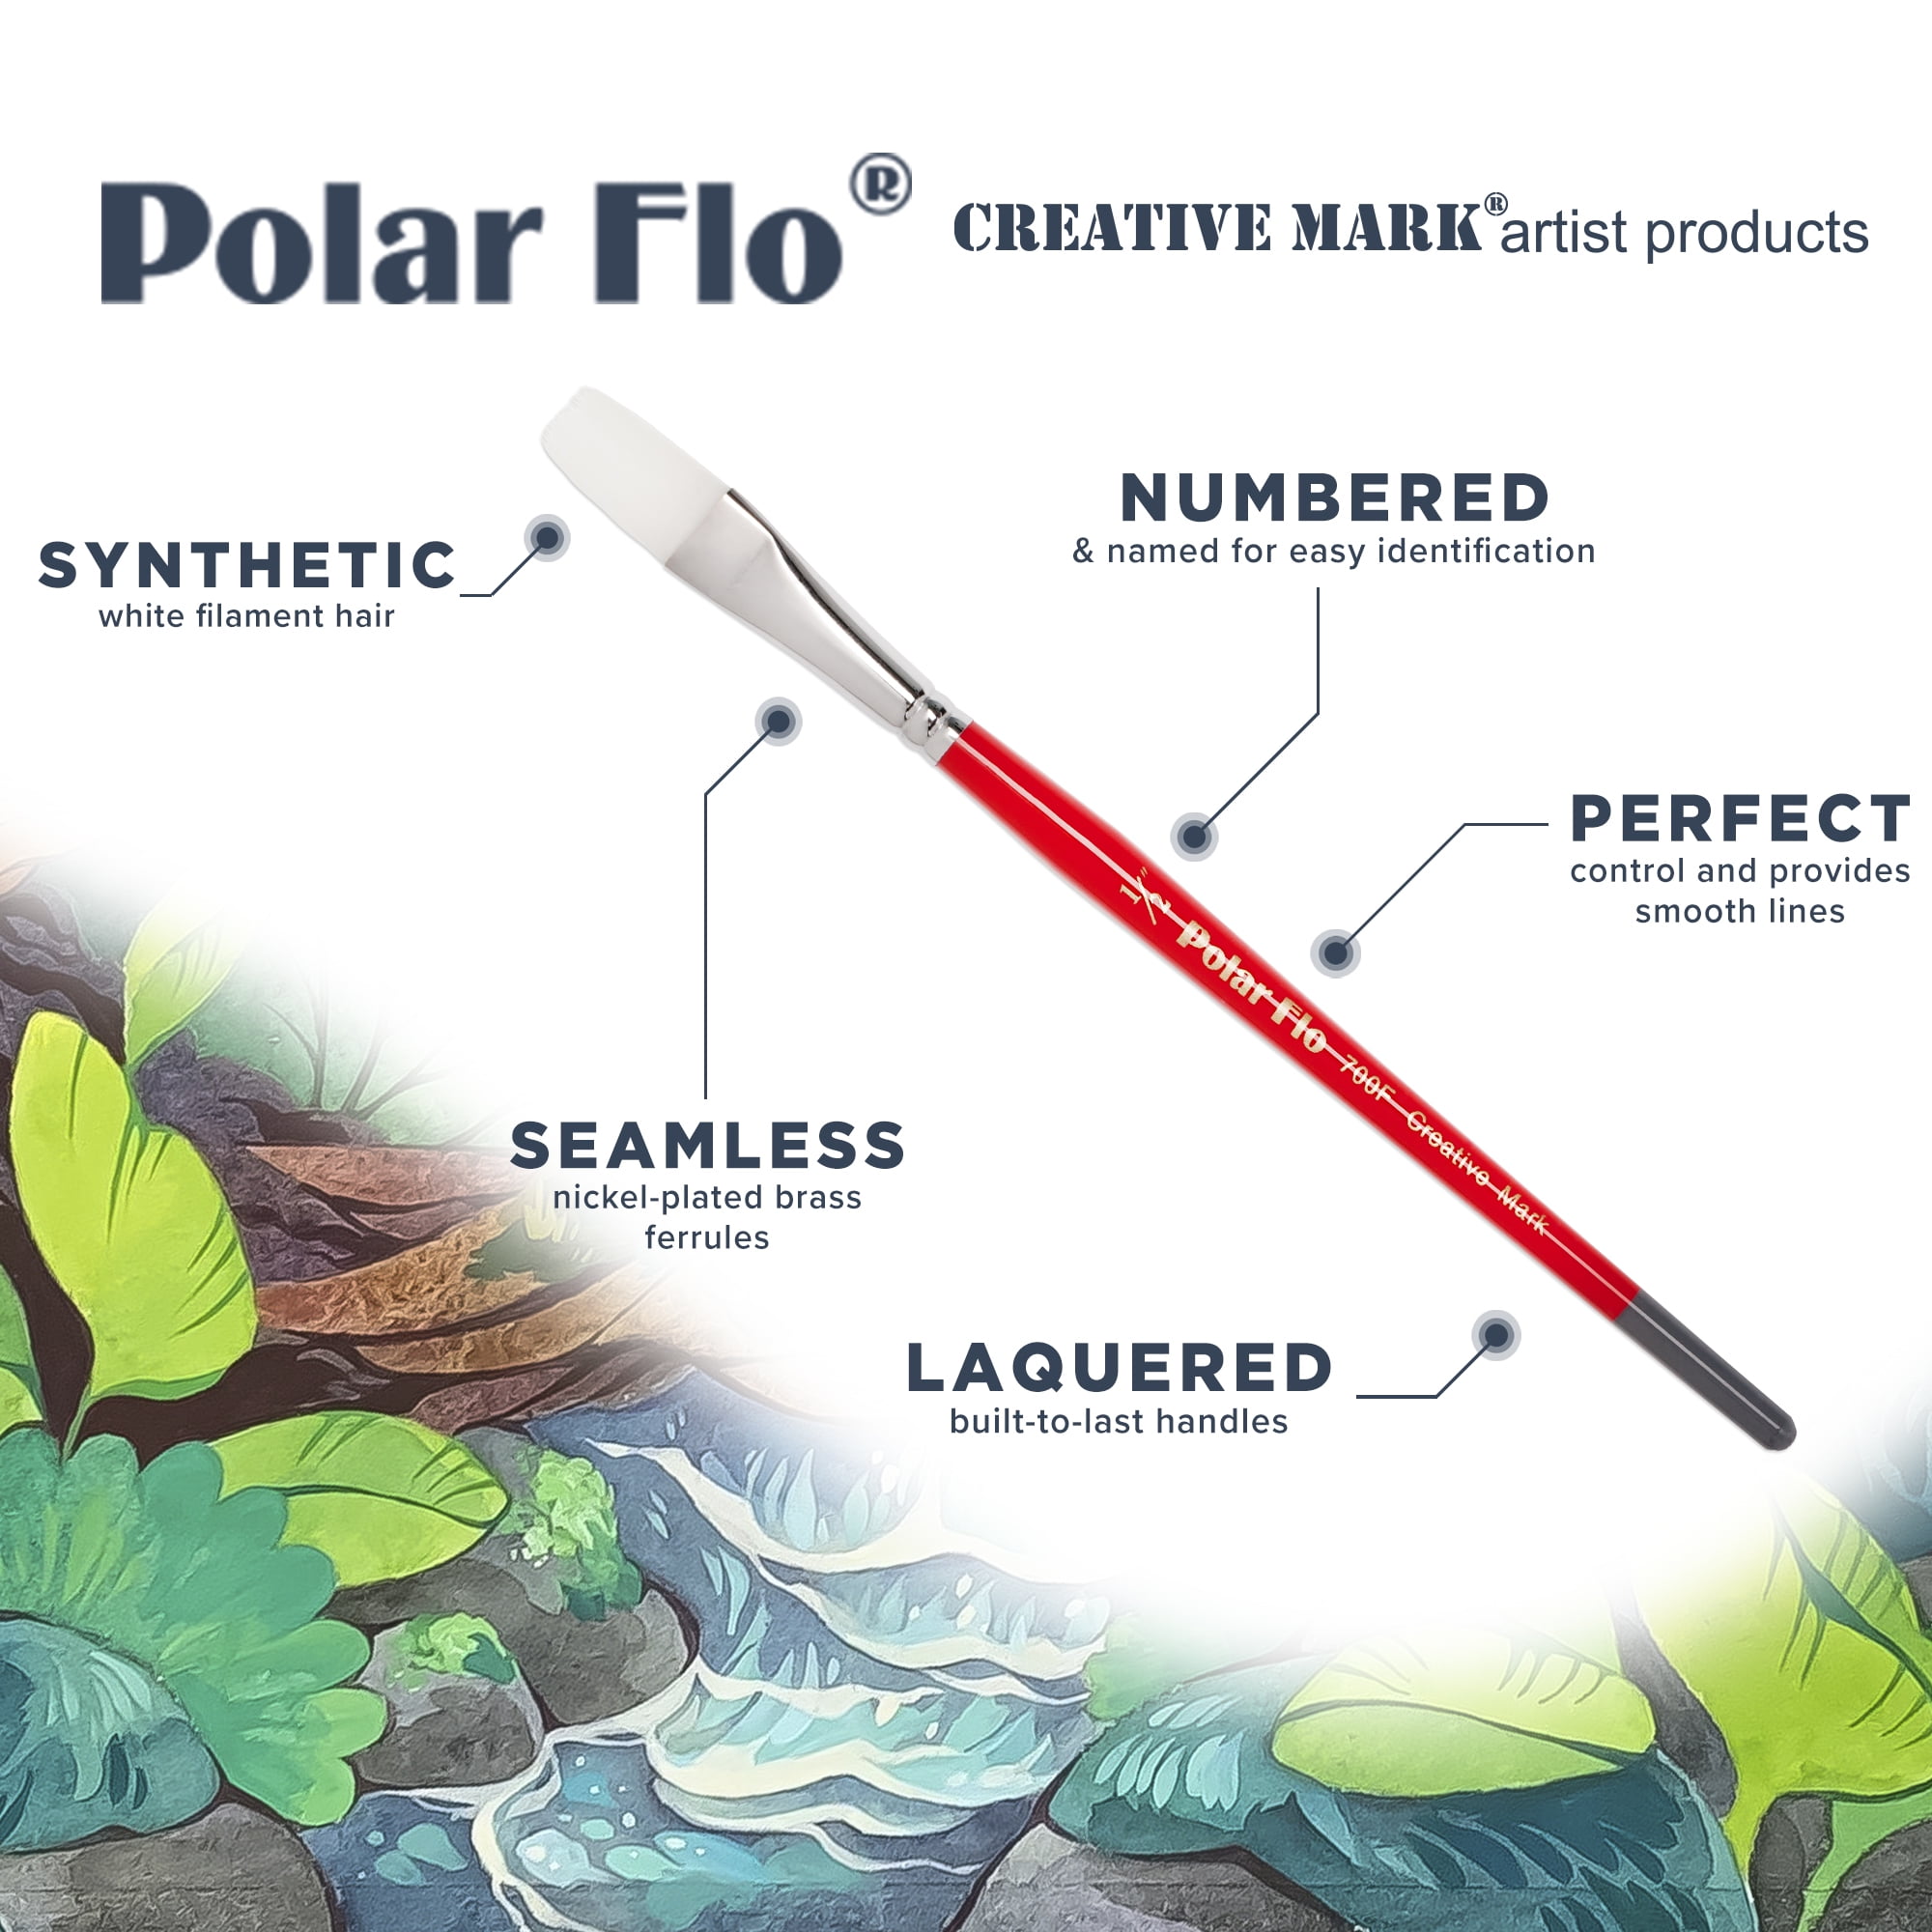 Creative Mark Polar-Flo Watercolor Brush 700F Flat 1/2